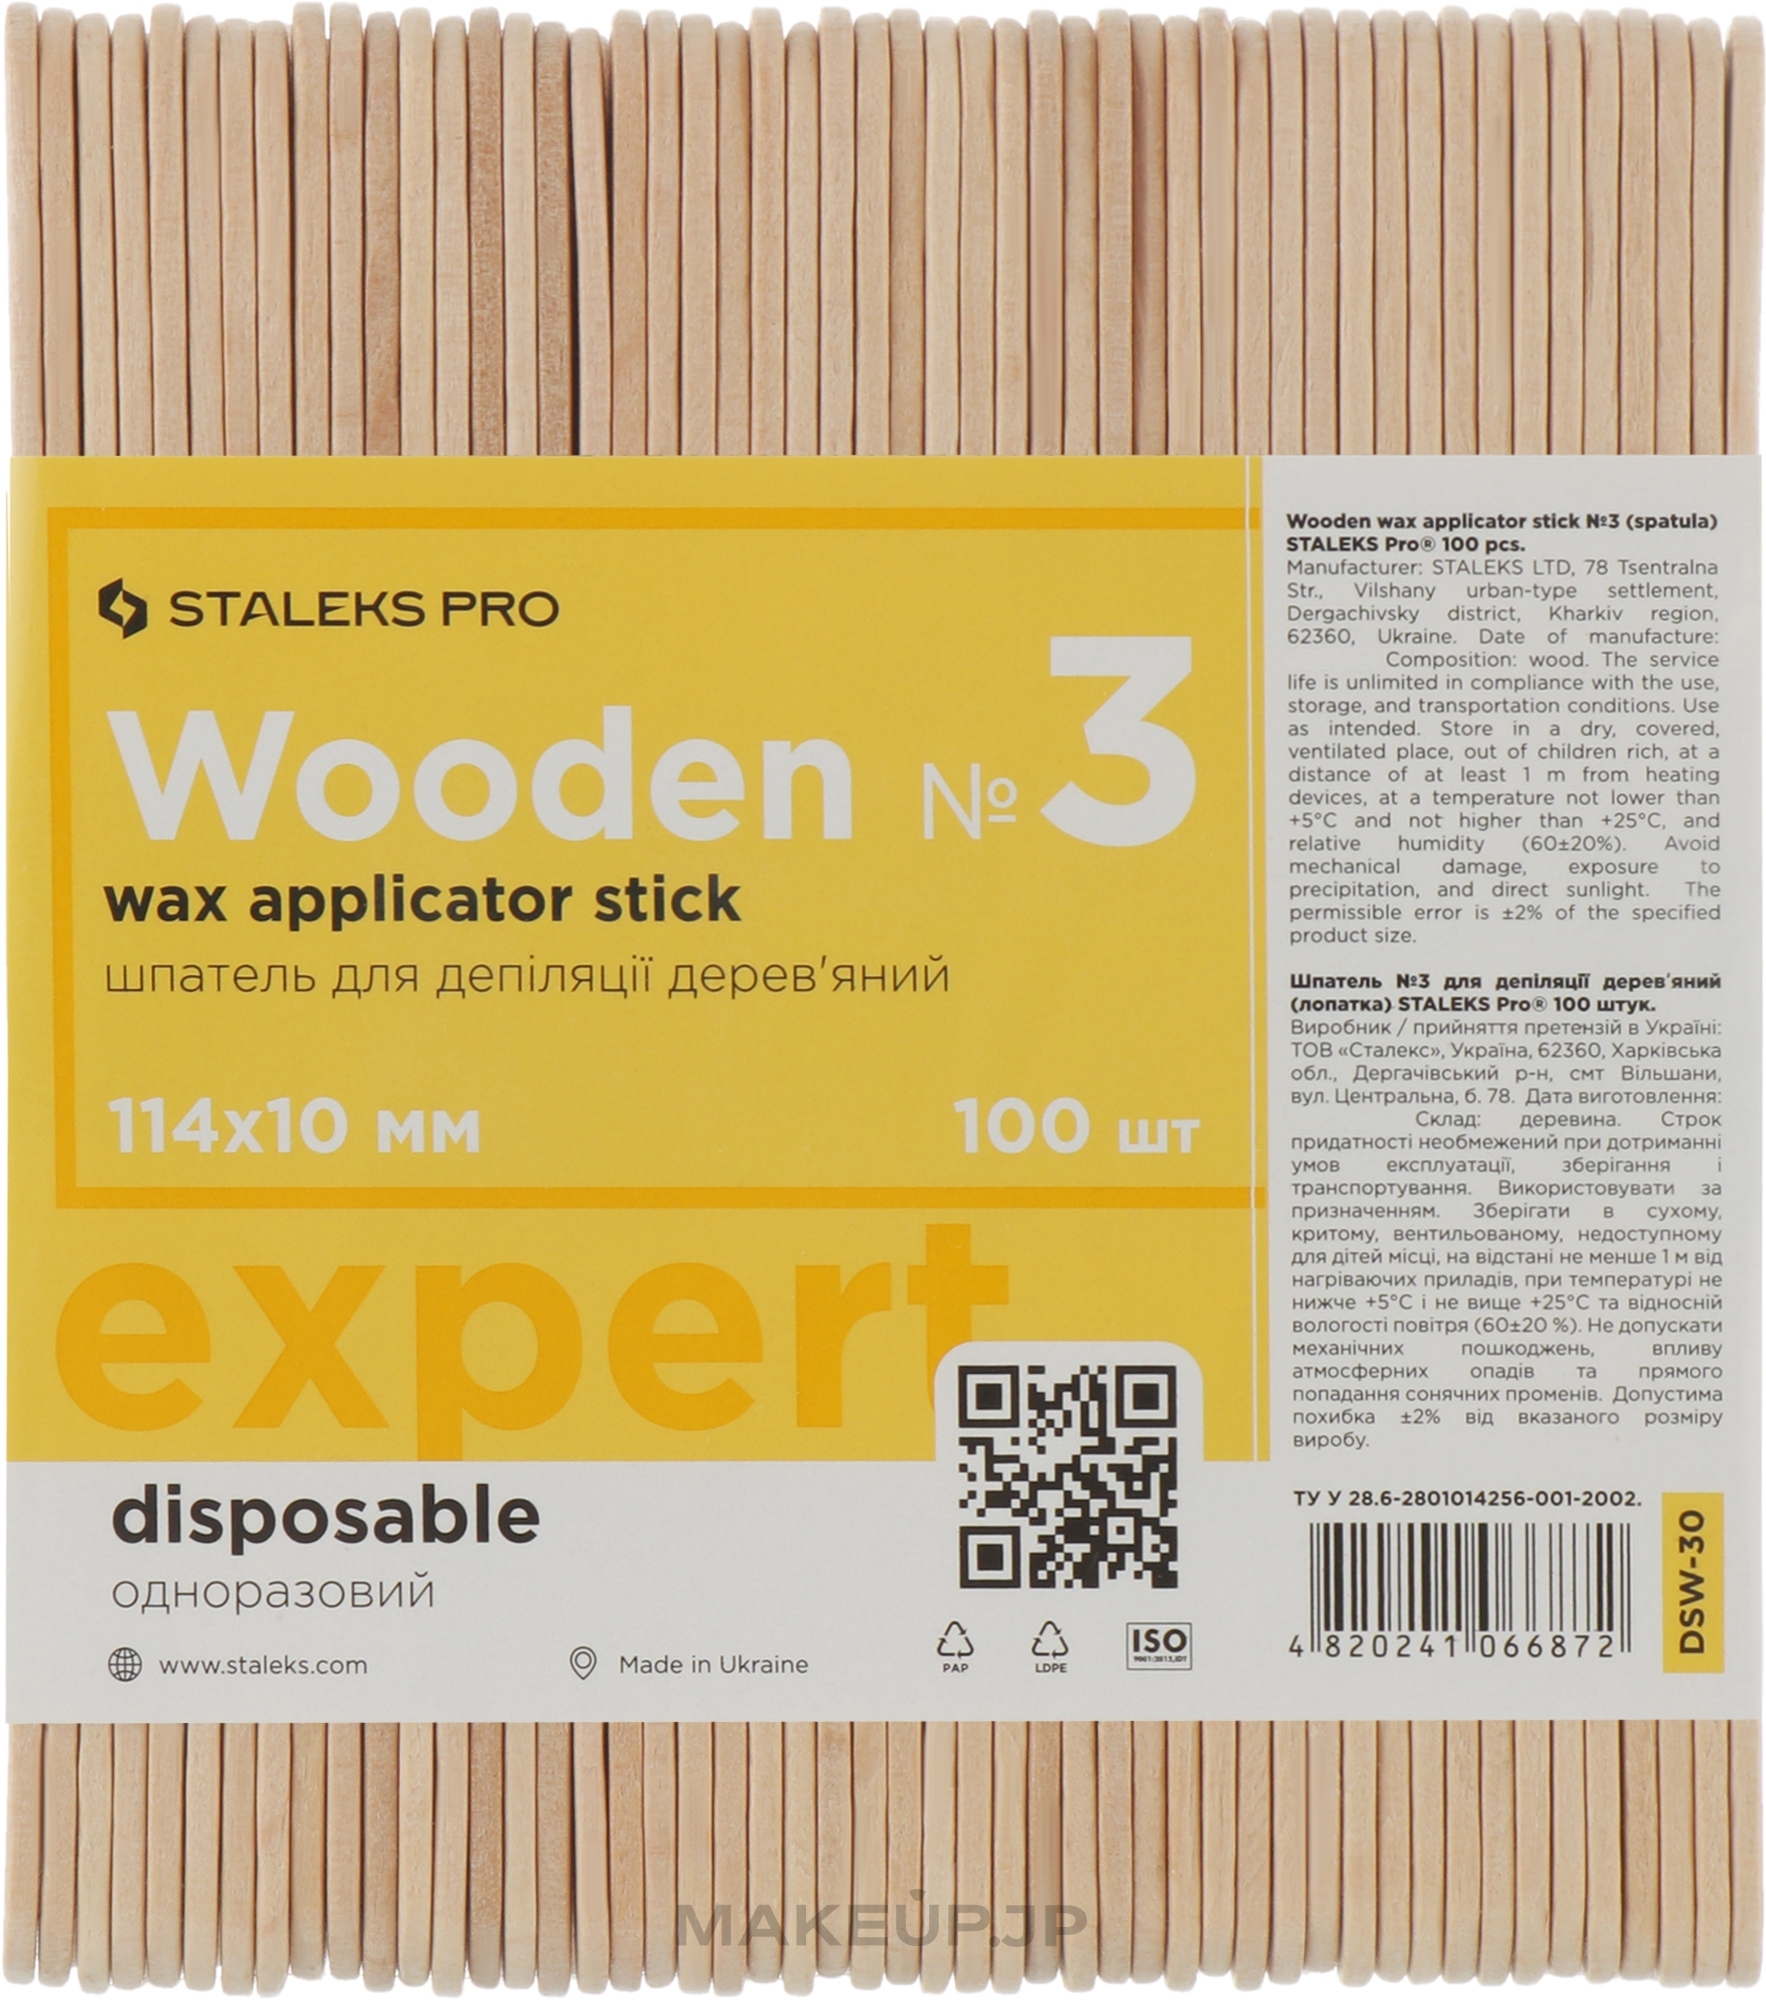 Wooden Depilation Spatula #3, 100 pcs - Staleks Pro Wooden Wax Applicator Stick №3 — photo 100 szt.